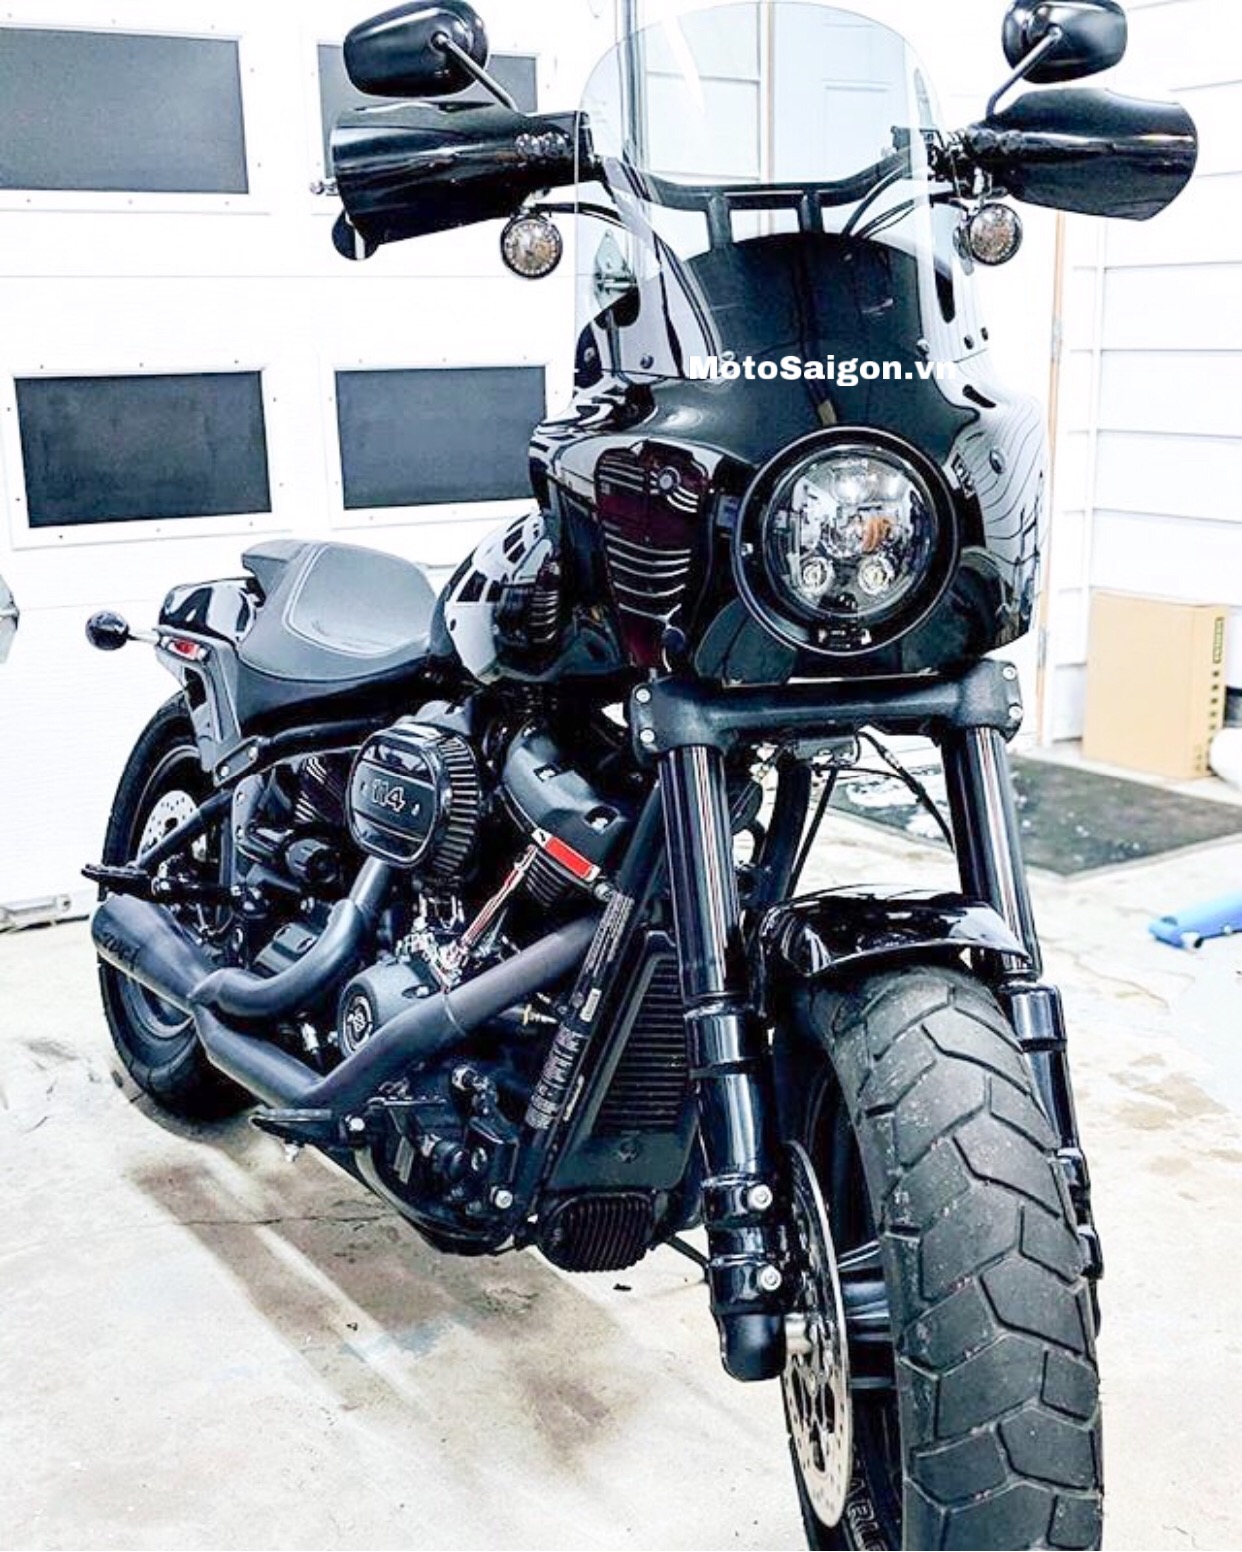 Muon Van Harley Davidson Fat Bob độ Phong Cach Club Style Motosaigon